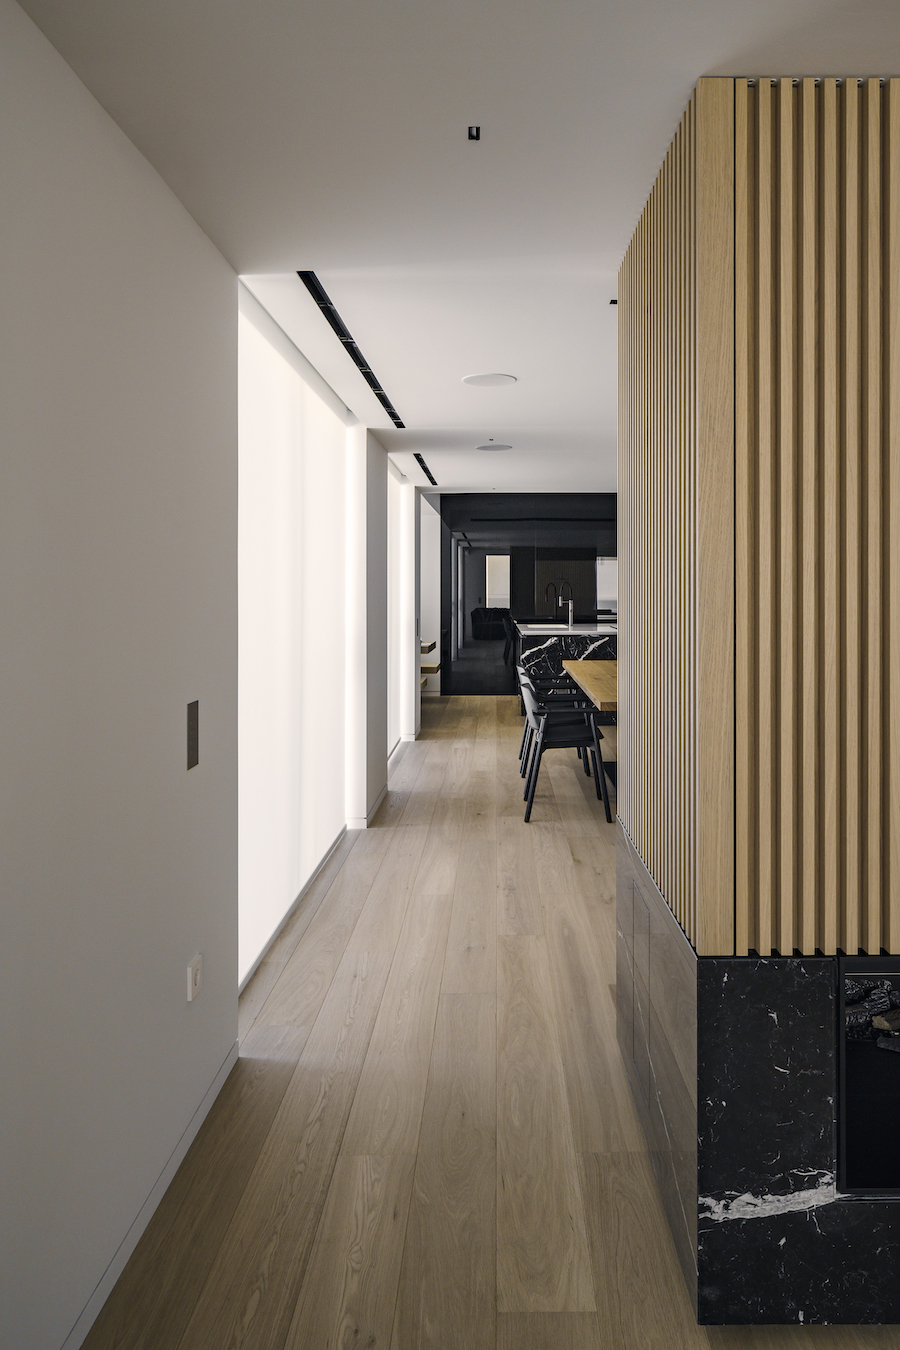 Archisearch Gkotsis Serafimidou architects designed a wooden clad apartment interior in Glyfada